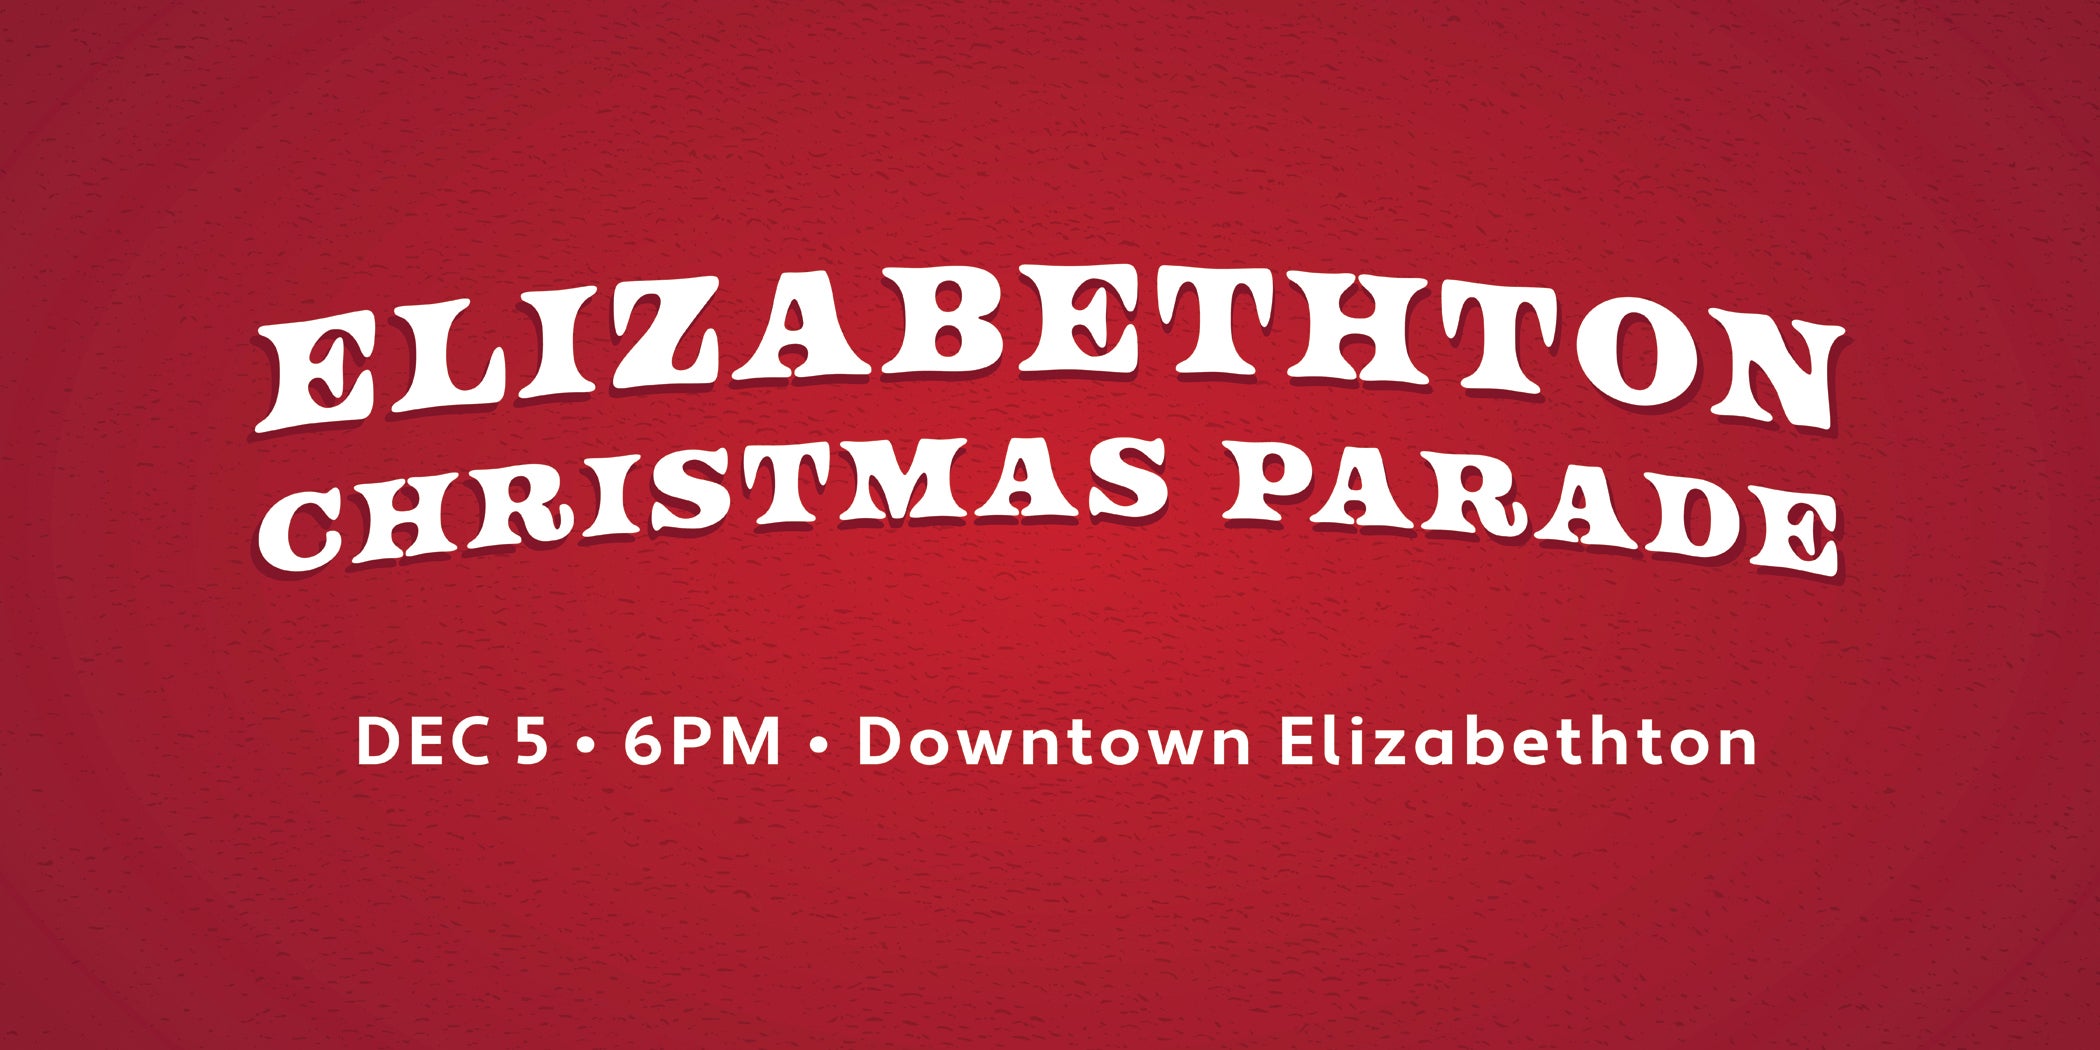 Main Street Elizabethton announces Christmas parade details www